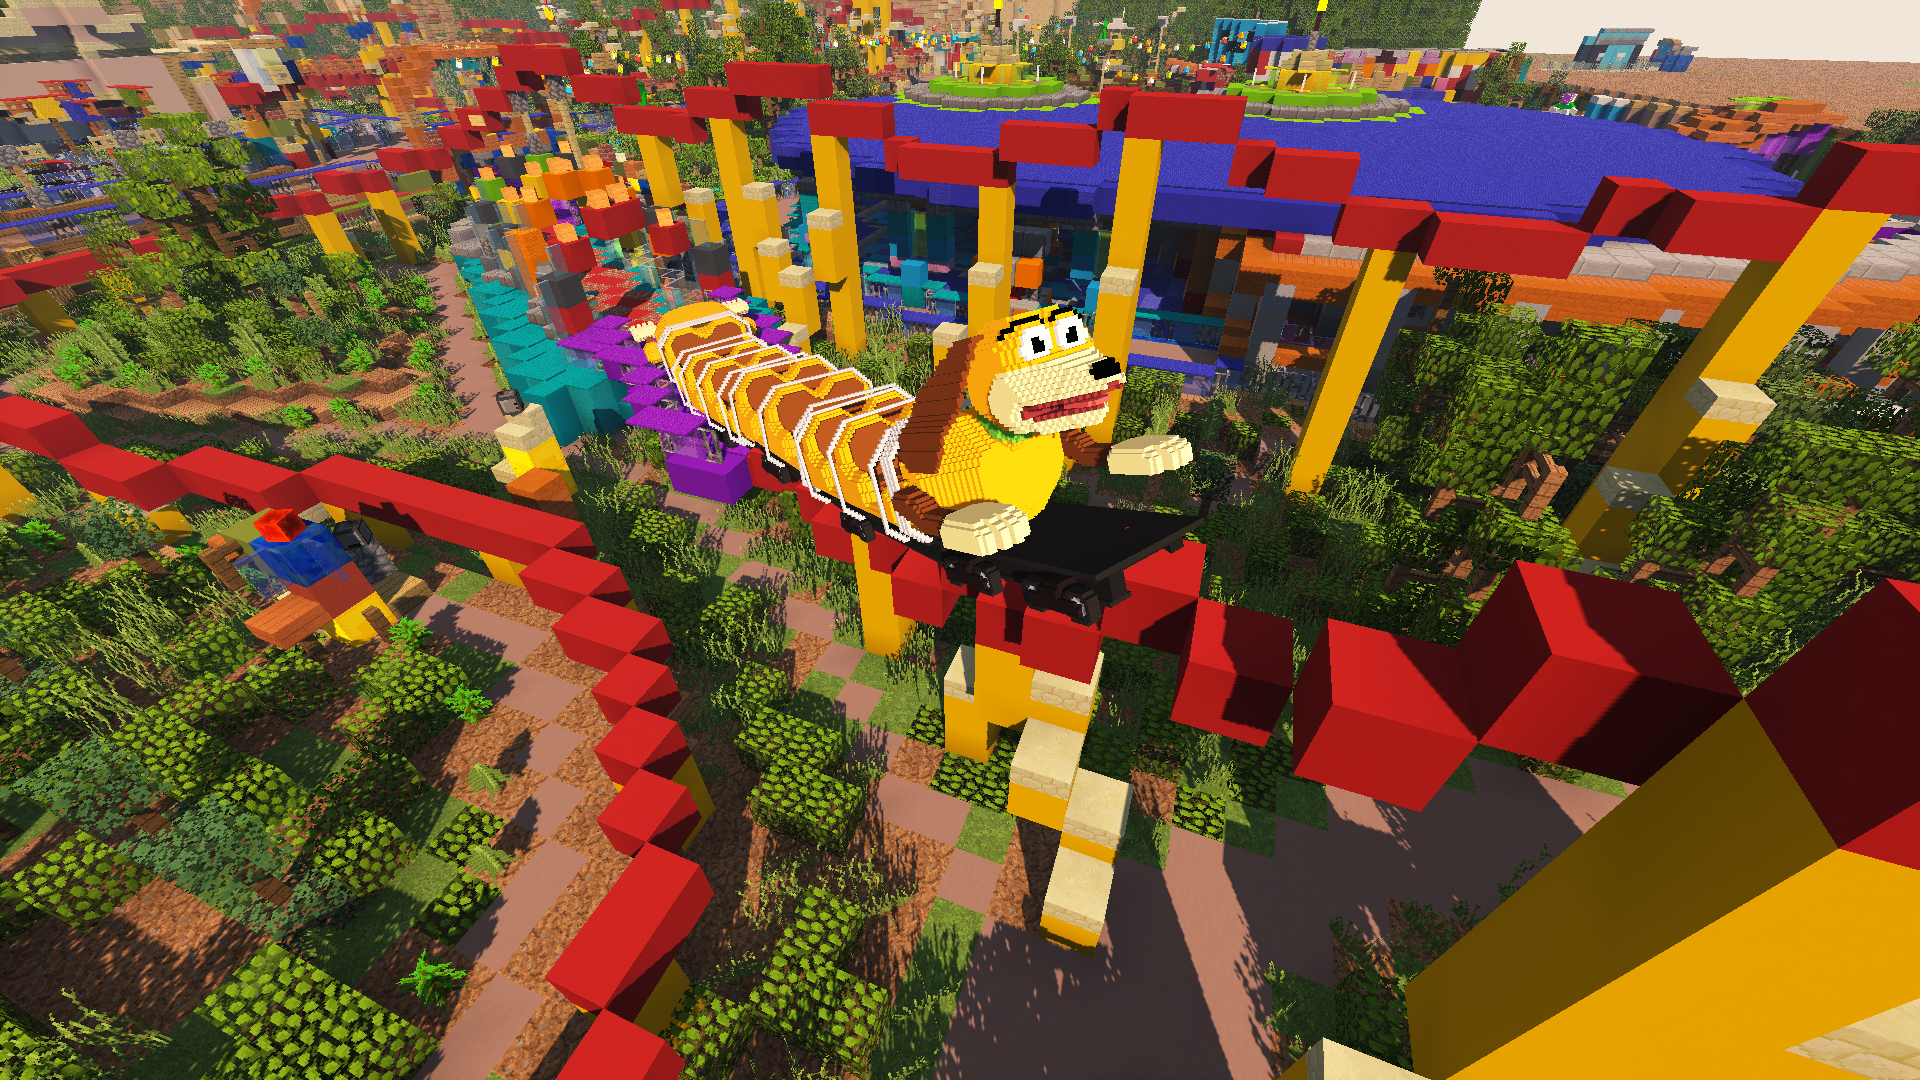 Slinky Dog Dash In Minecraft Mcparks